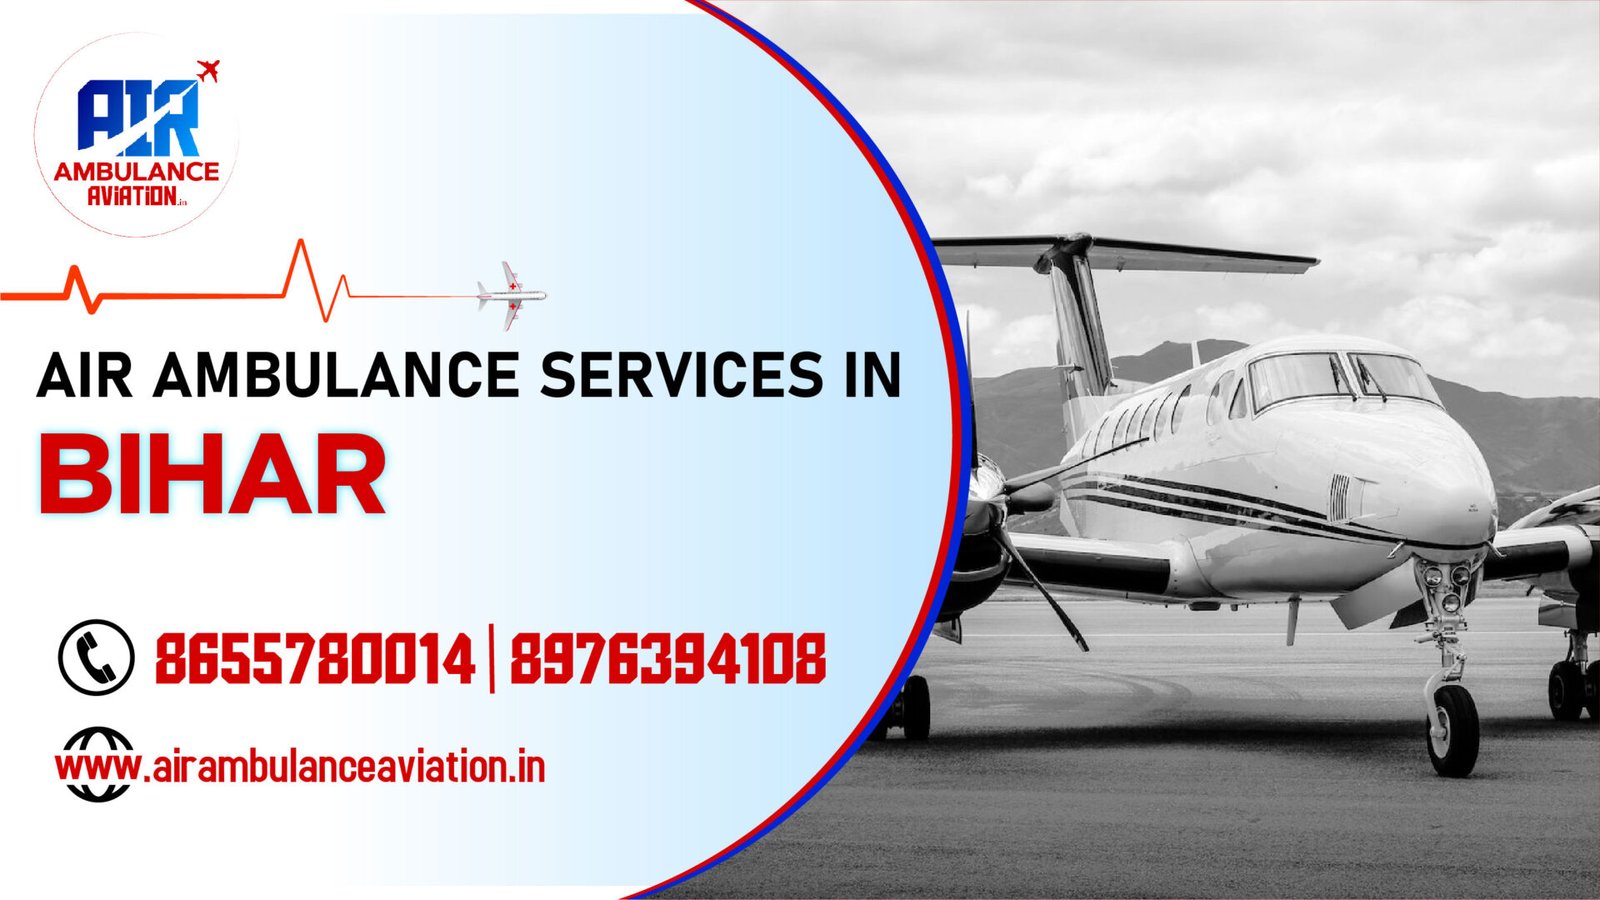 Air ambulance services in Bihar